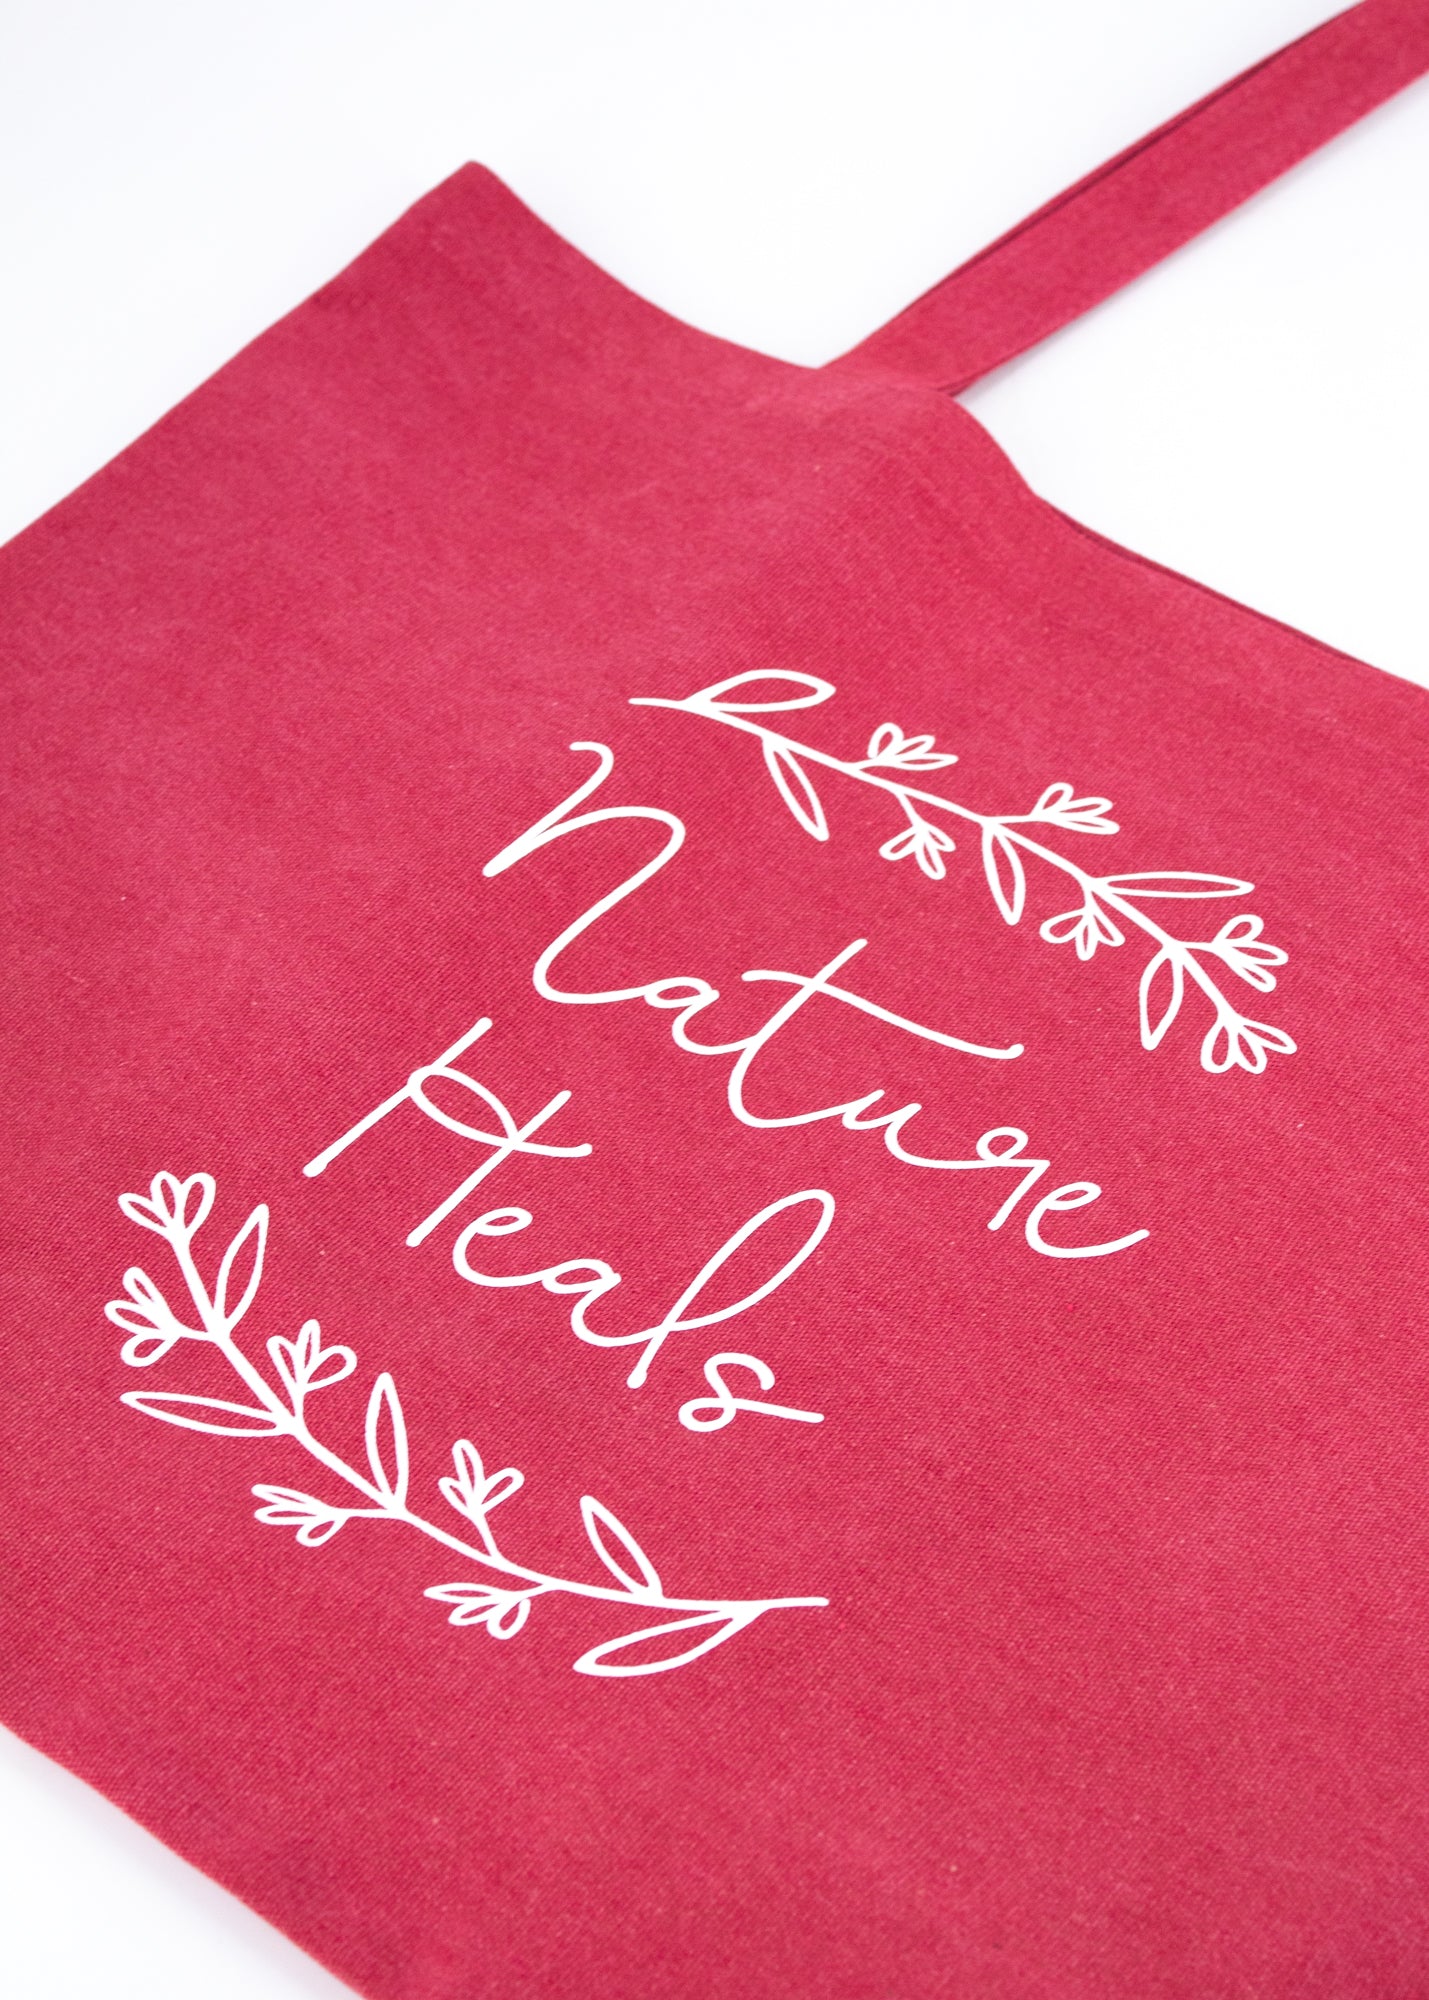 Medium Red Tote Bag - "Nature Heals" -  - Nature Supply Co. - Wild Lark